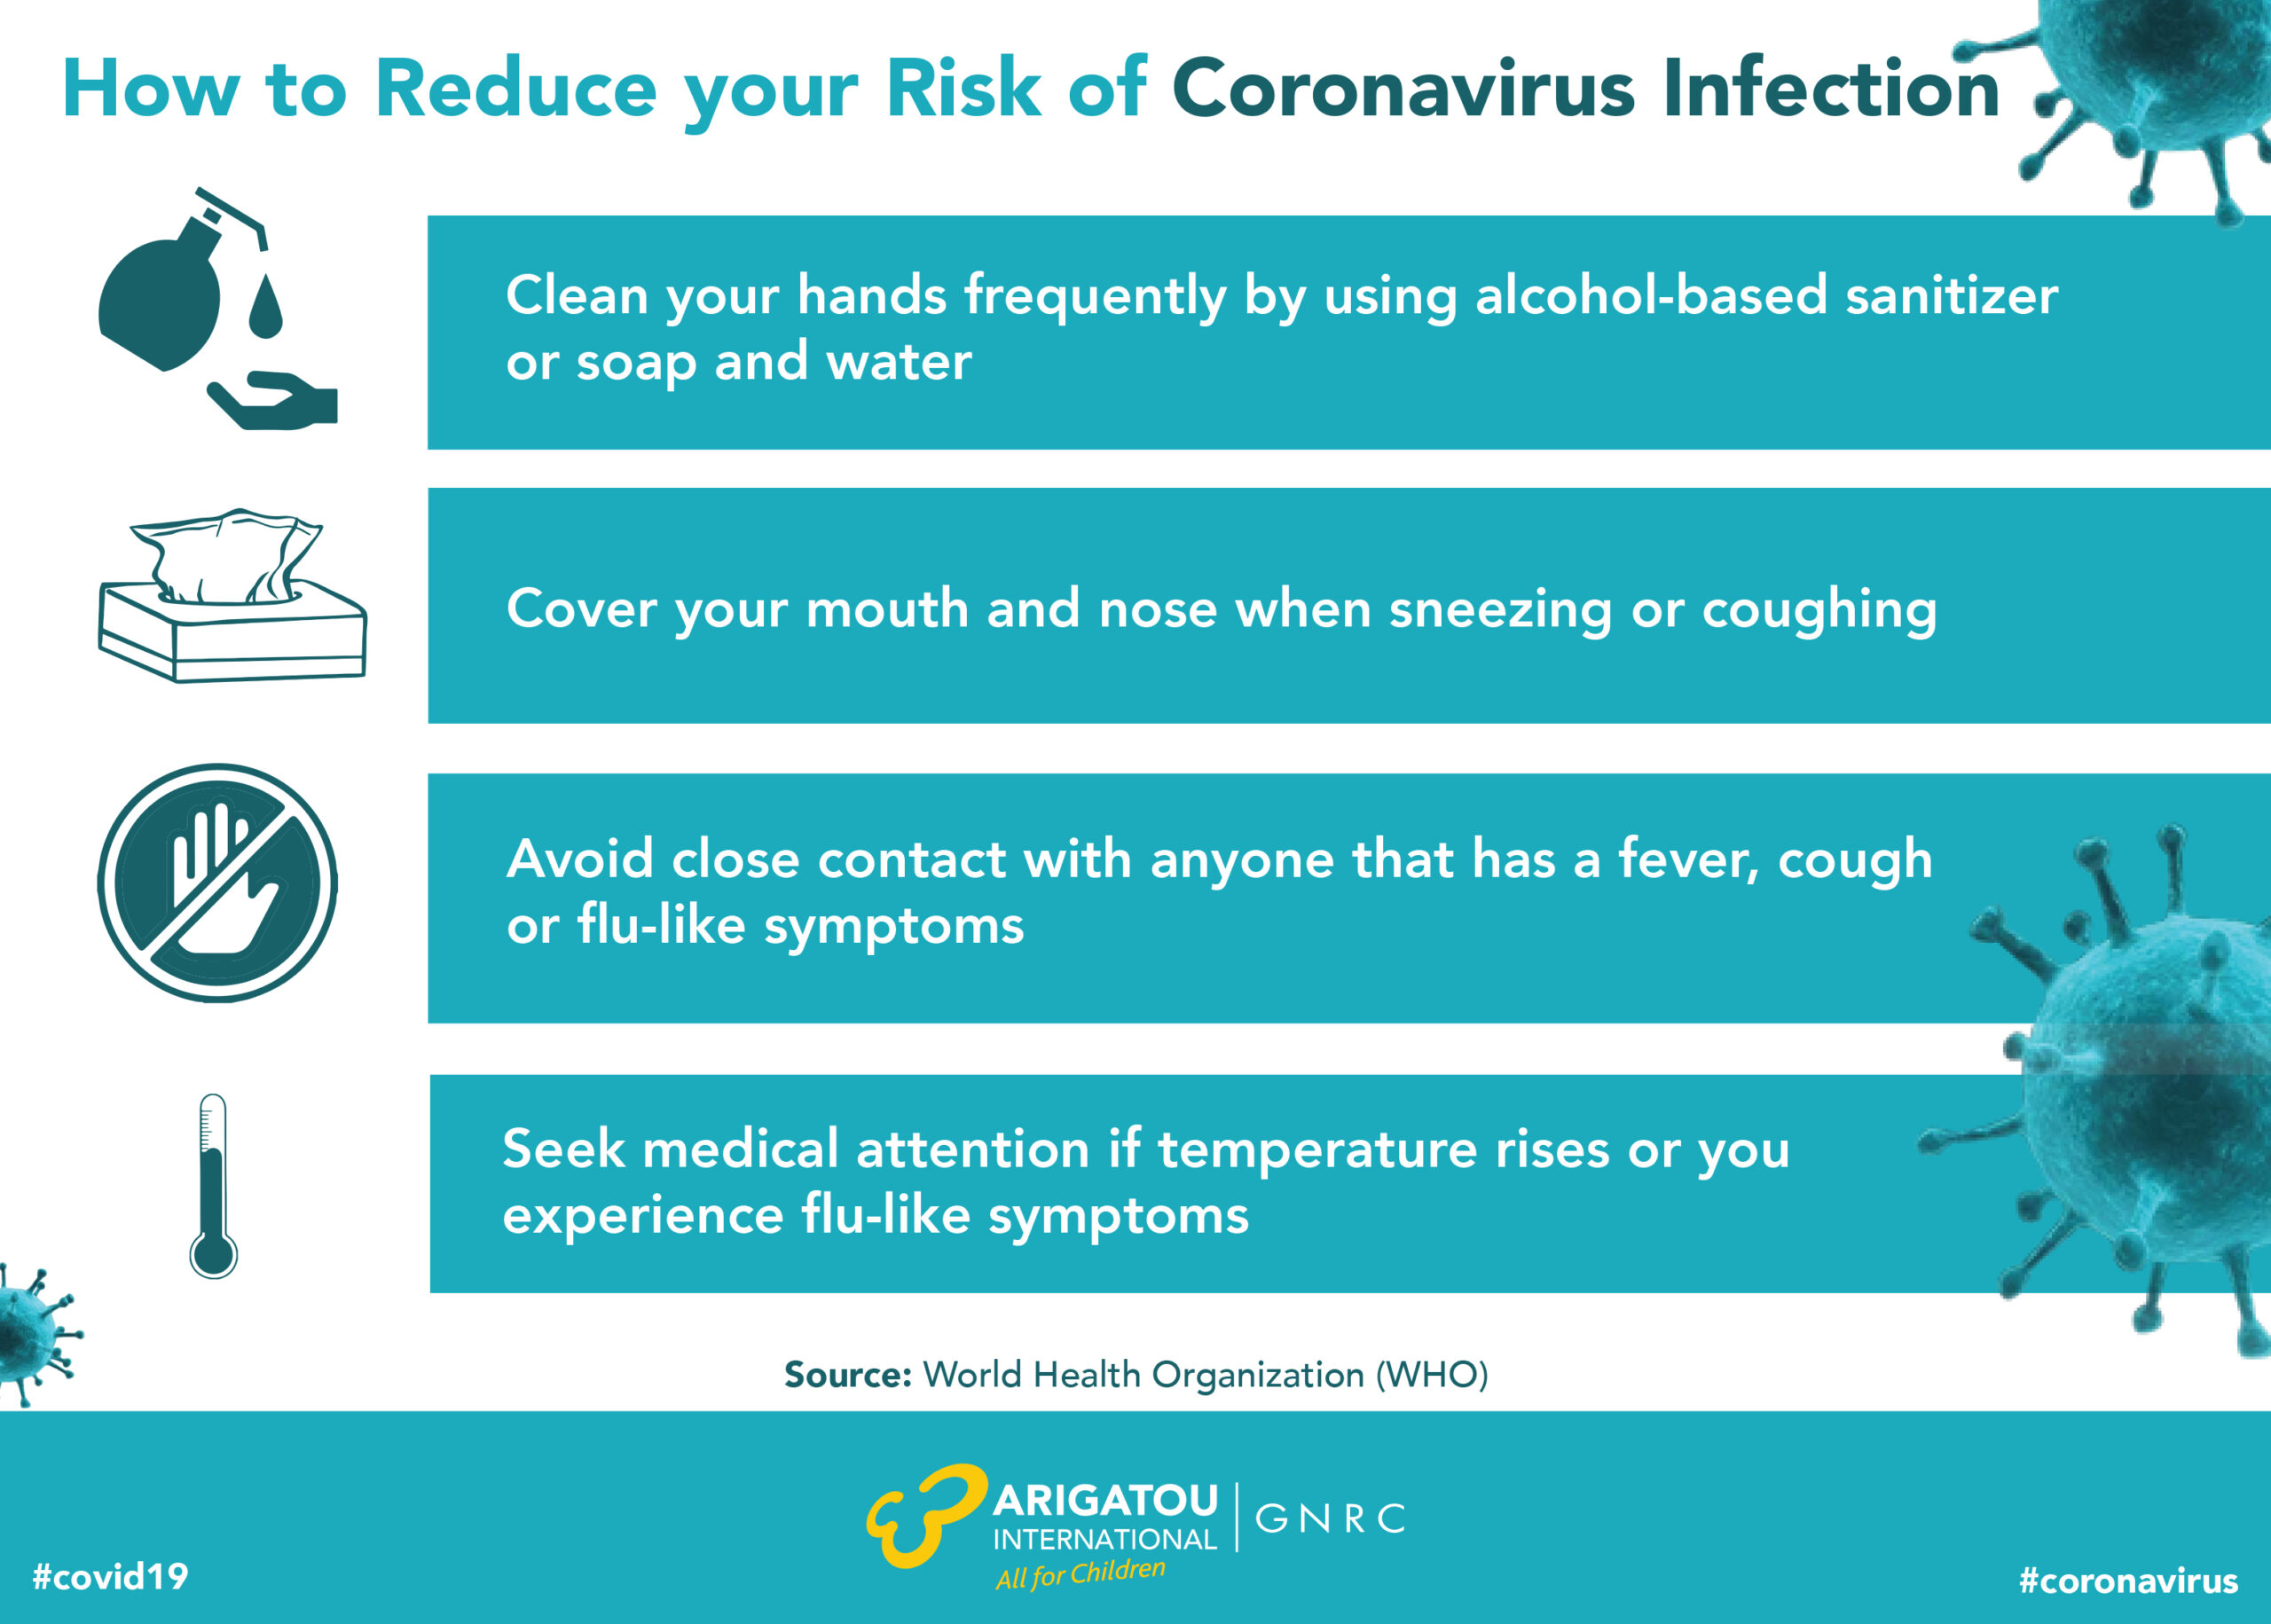 Coronavirus COVID 19